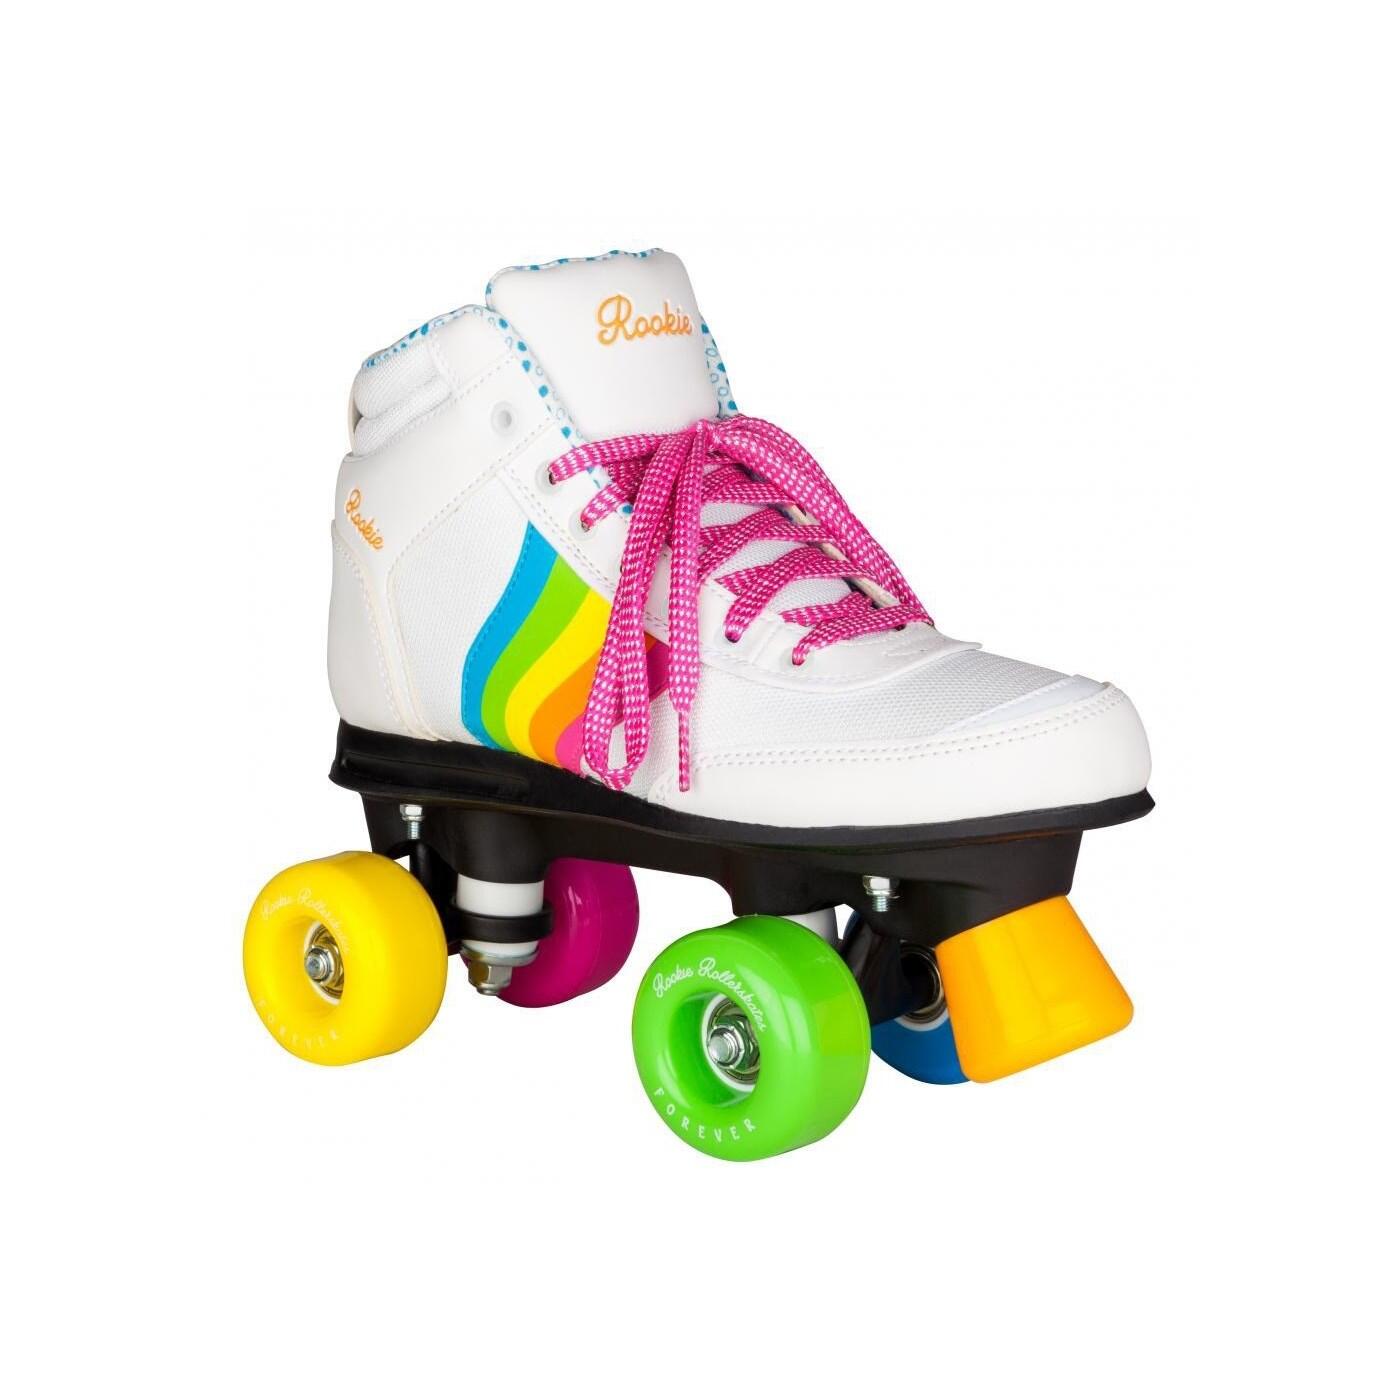 ROOKIE Forever Rainbow Quad Roller Skates - White/Multi